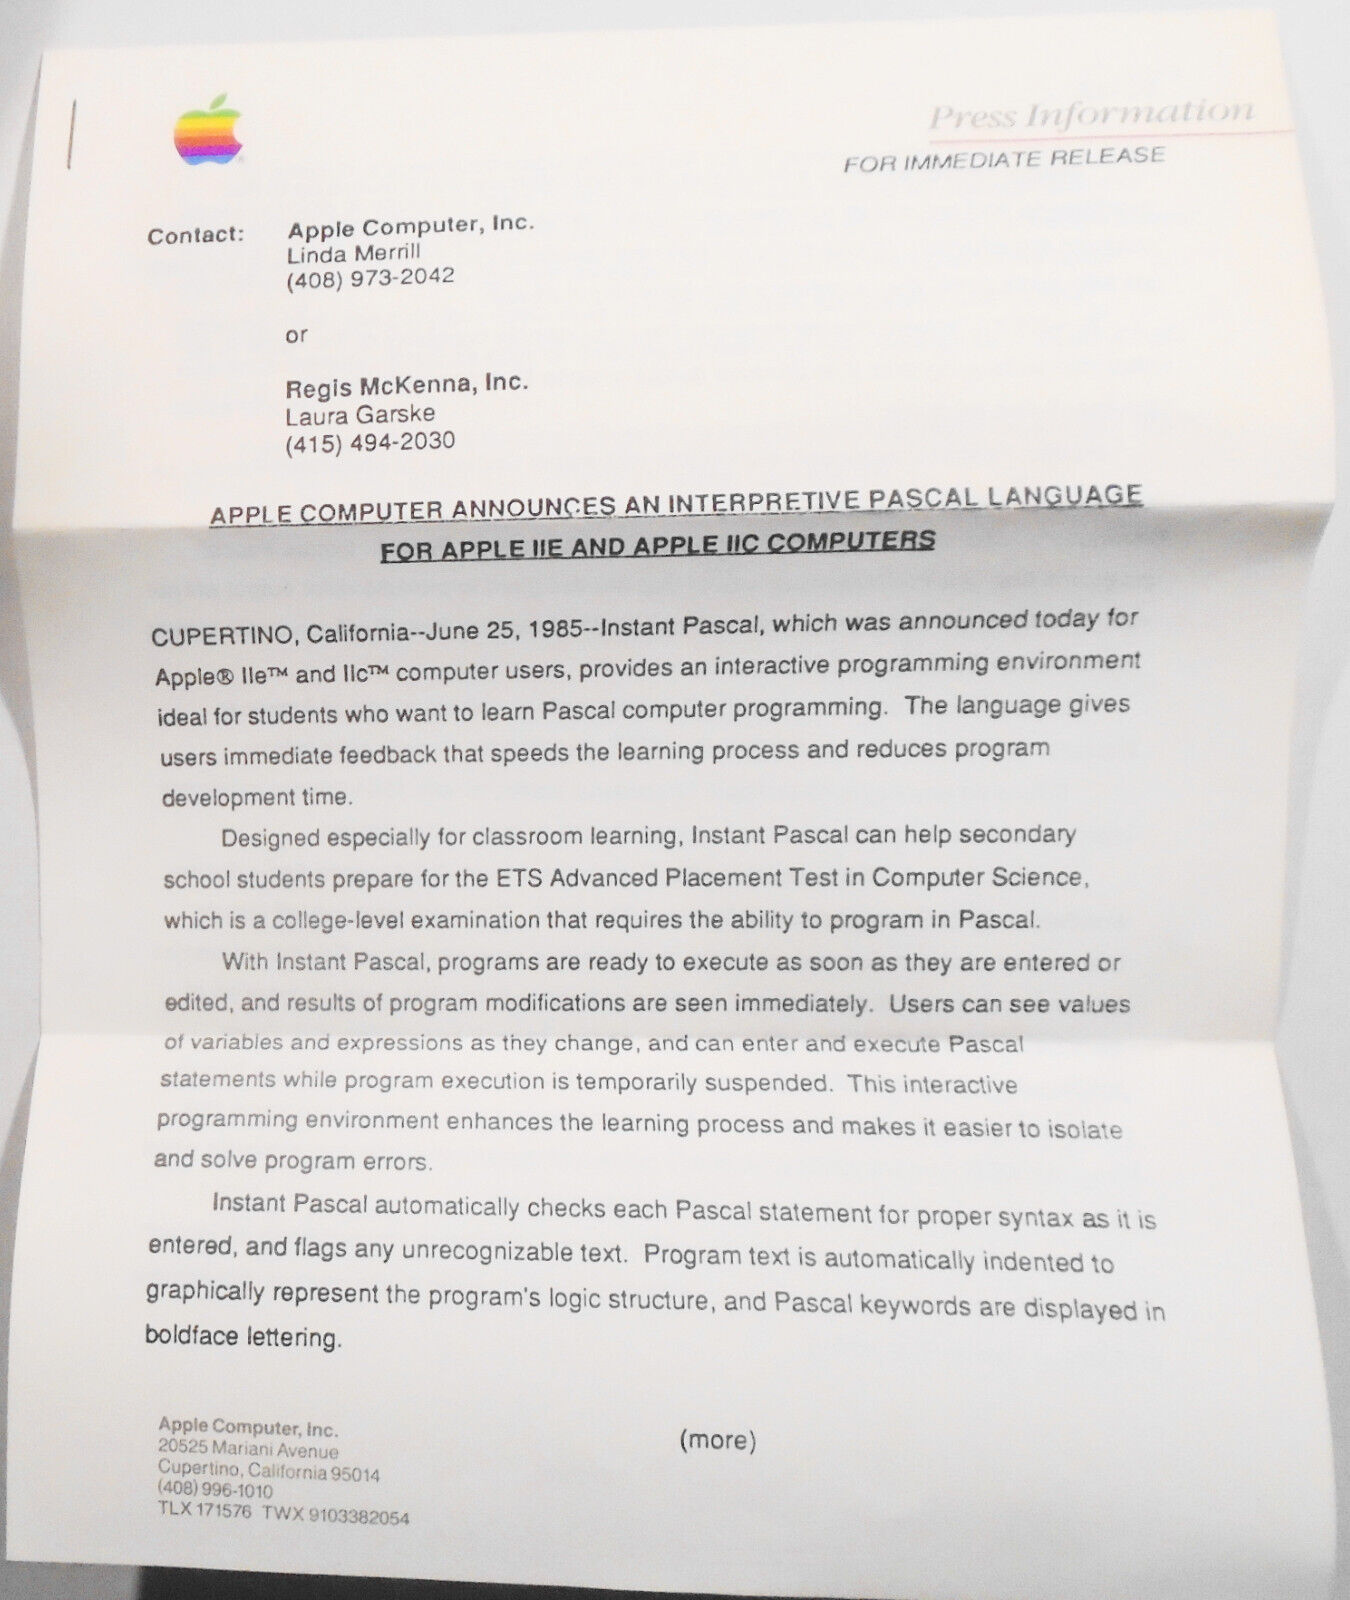 Apple announces Instant Pascal - original corporate press release, June 25, 1985